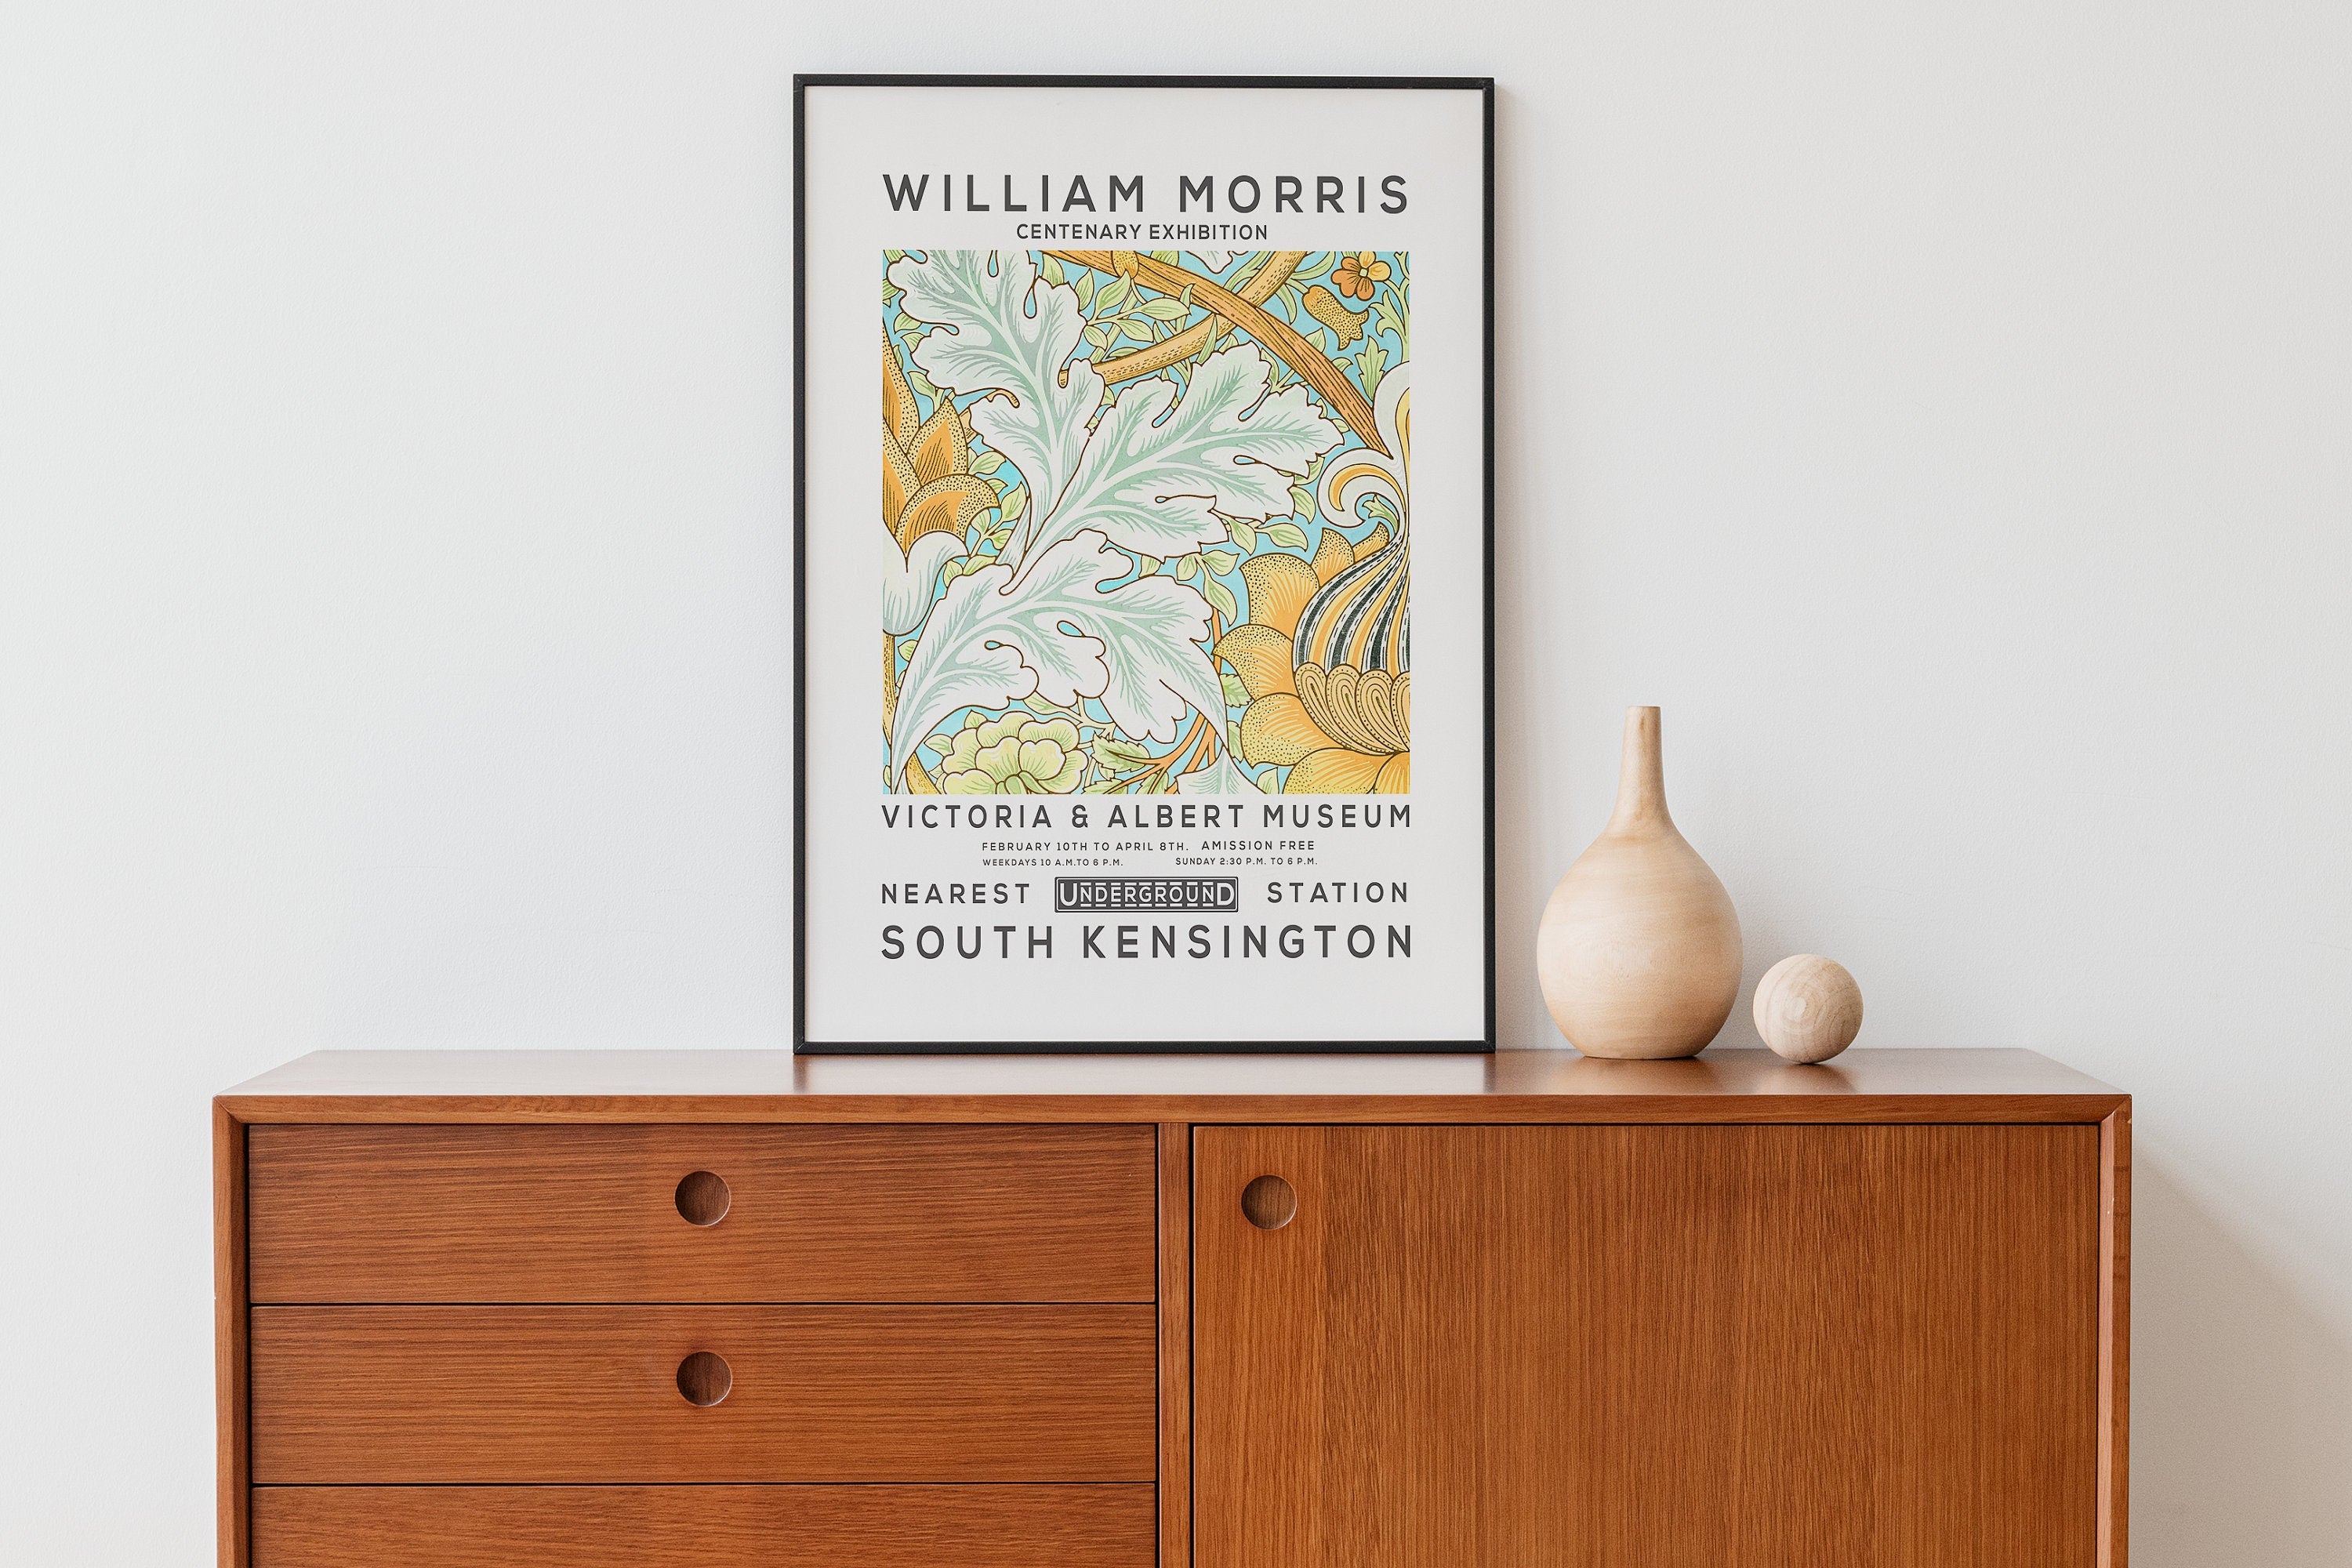 William Morris Print, Vintage Wall Decor, Exhibition Poster, Floral Wall Art, Flower Print, Home Decor, Golden Flowers